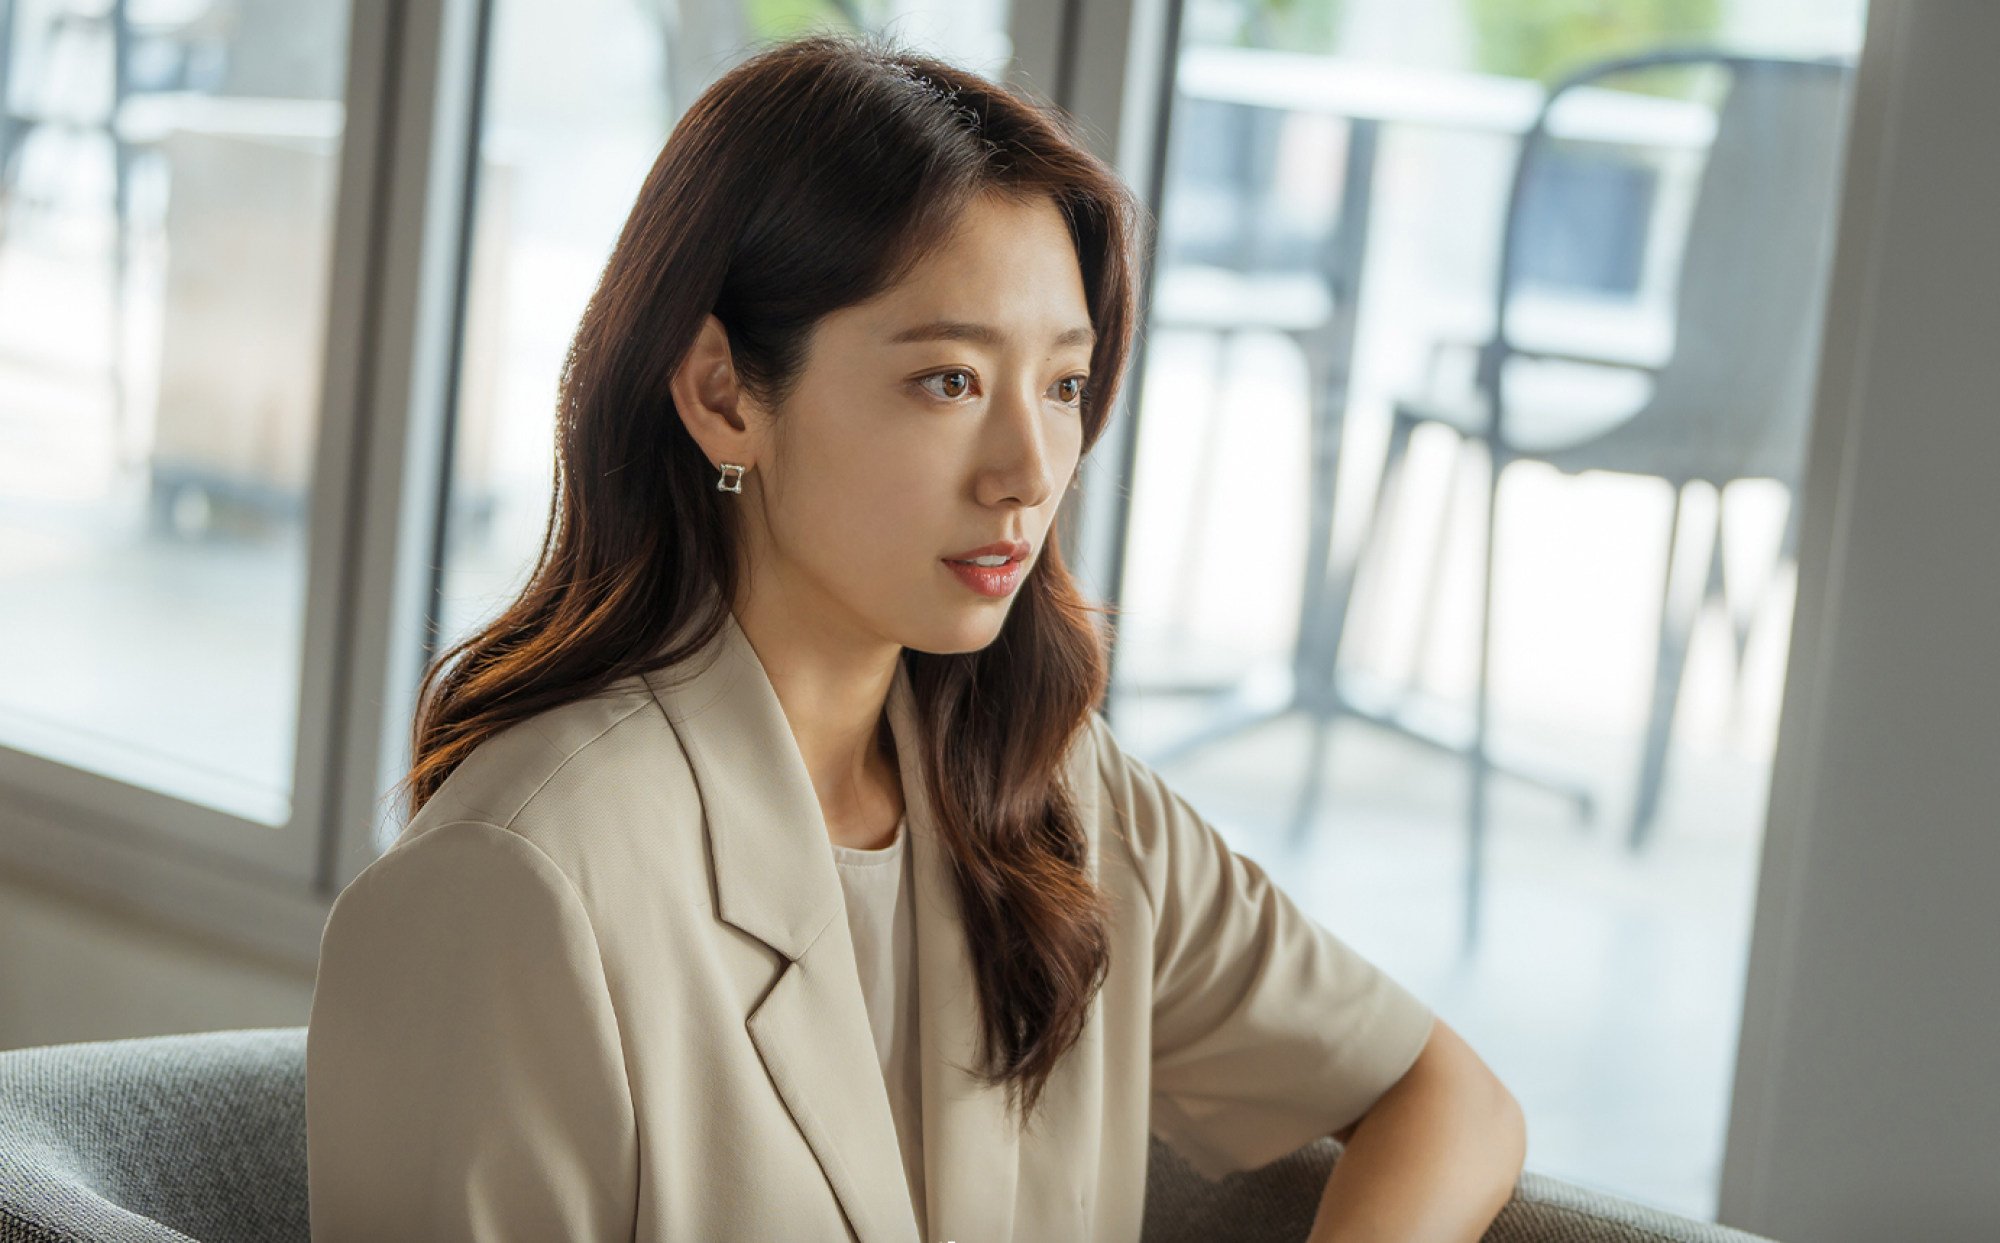 netflix k-drama midseason recap: doctor slump – park shin-hye, park hyung-sik carry the burden in a mental health drama with few new ideas